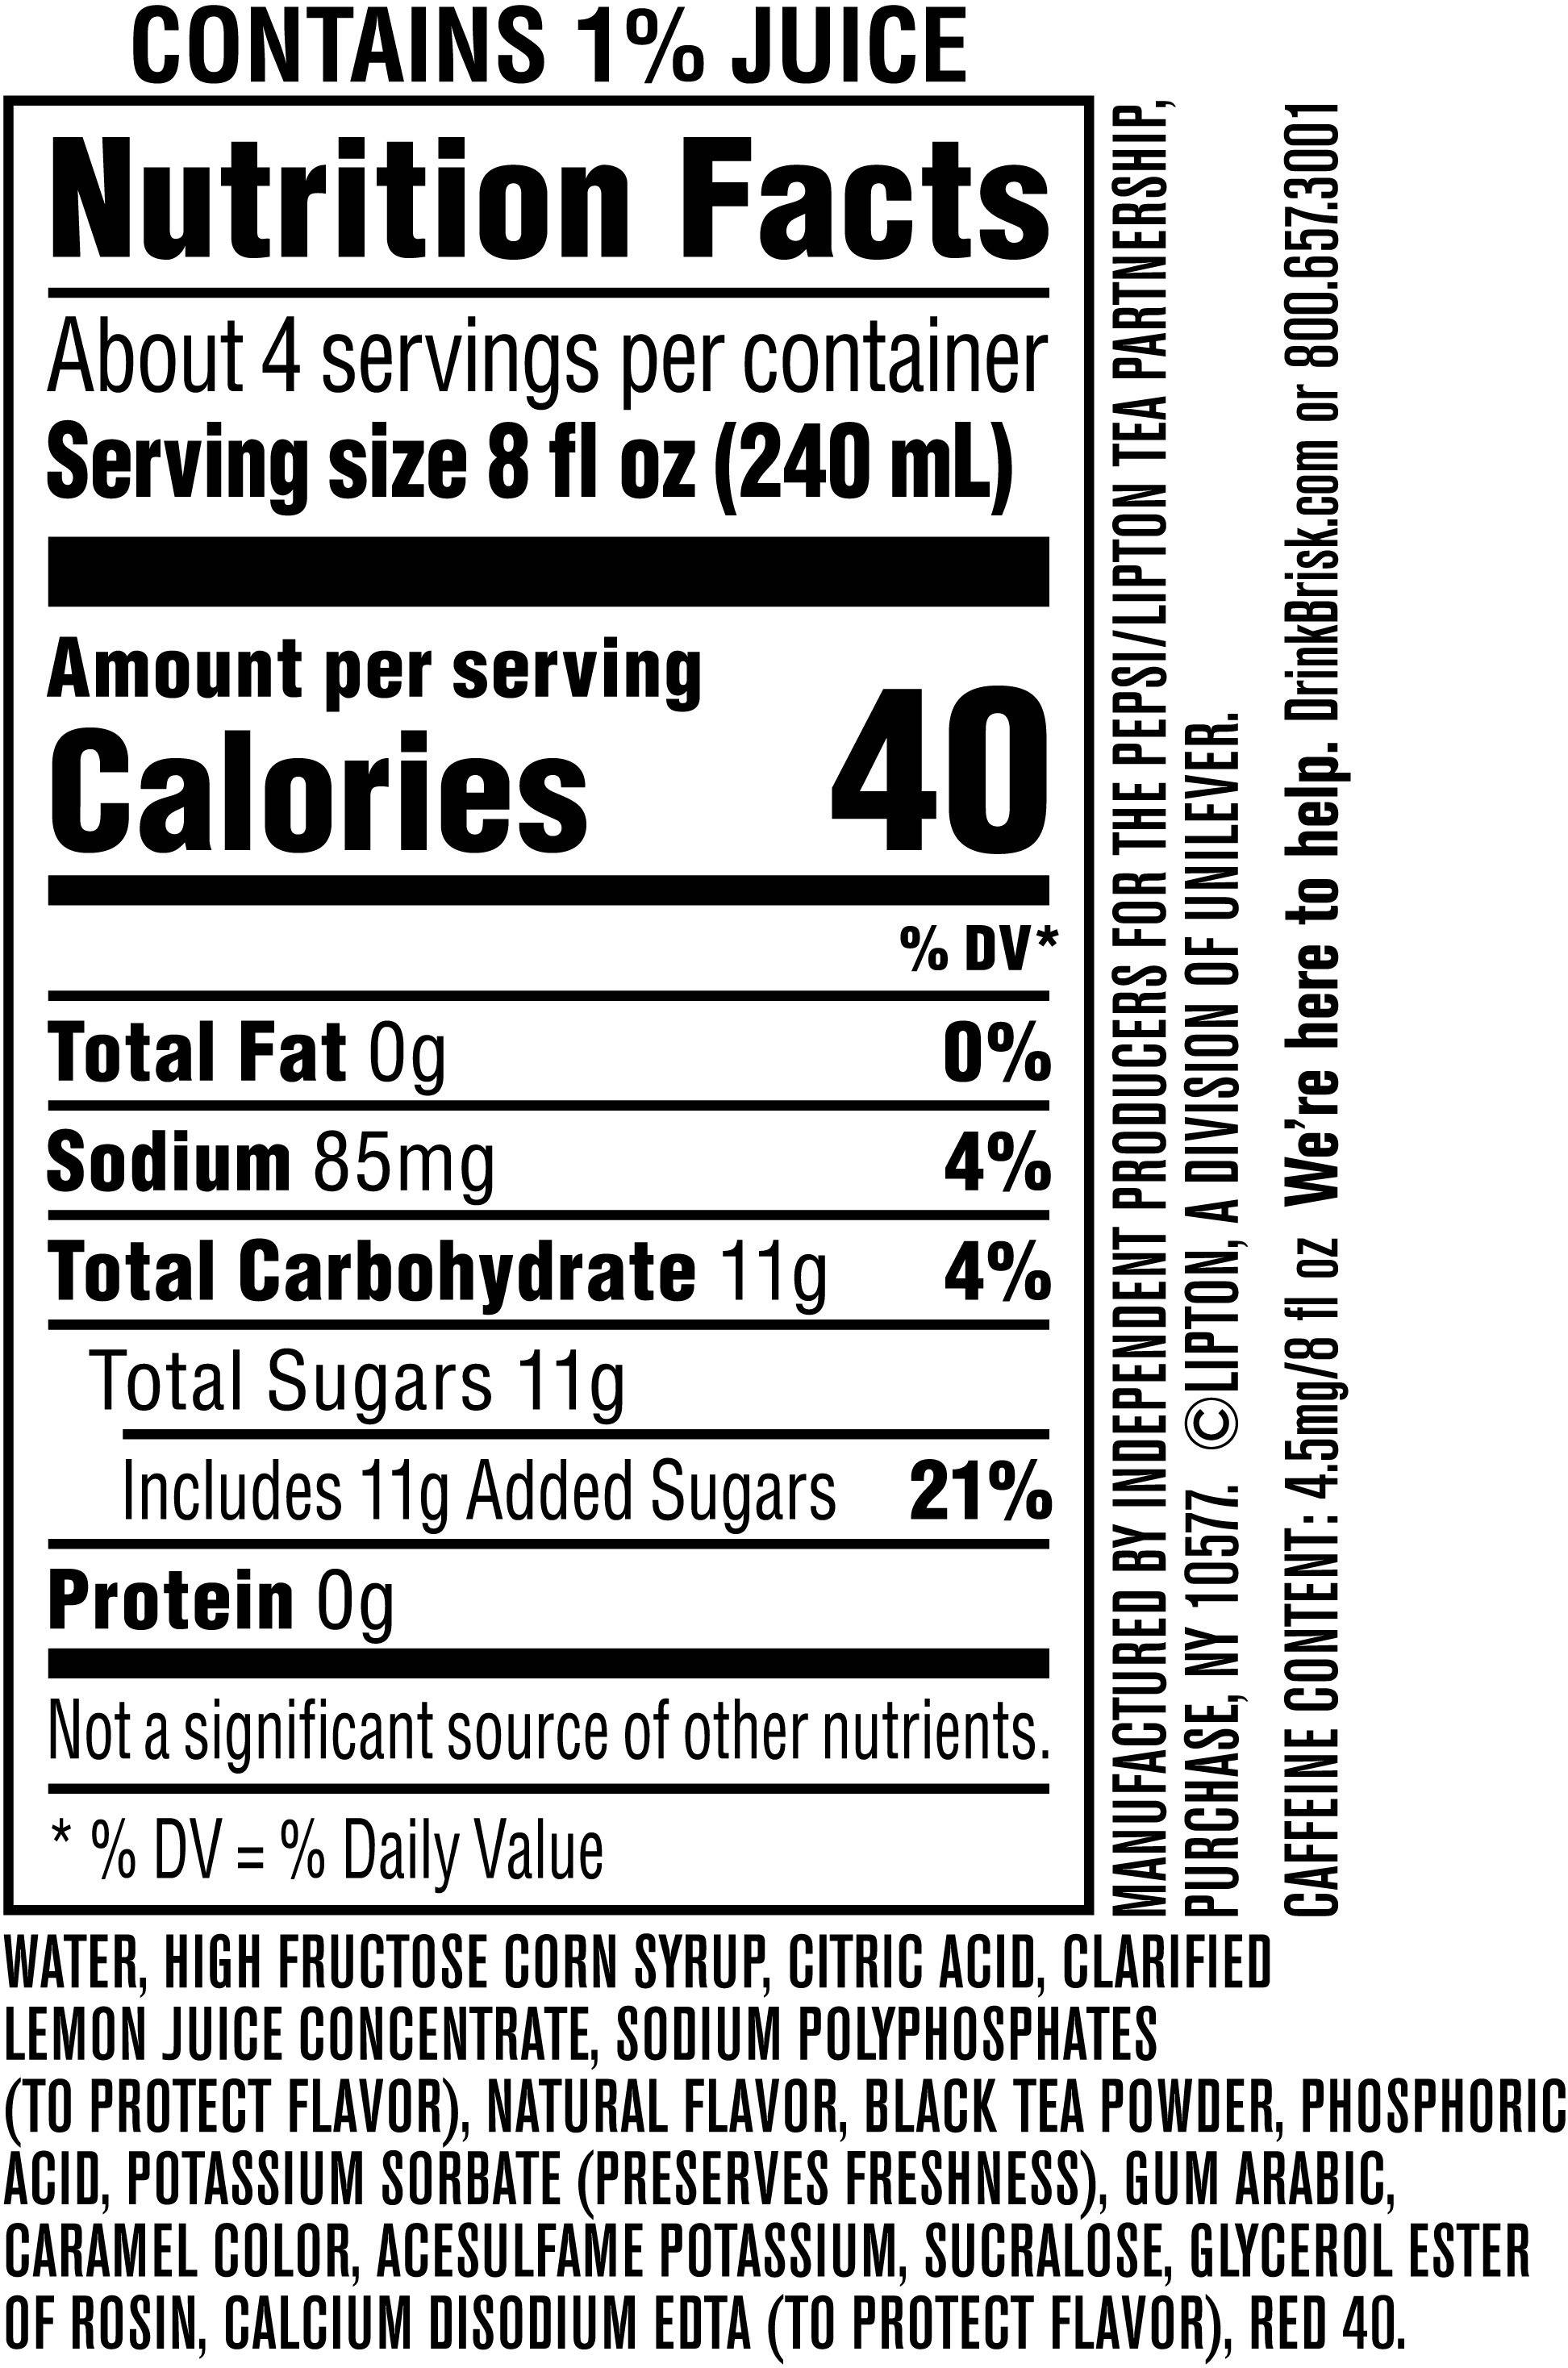 Image describing nutrition information for product Brisk Tea Lemonade